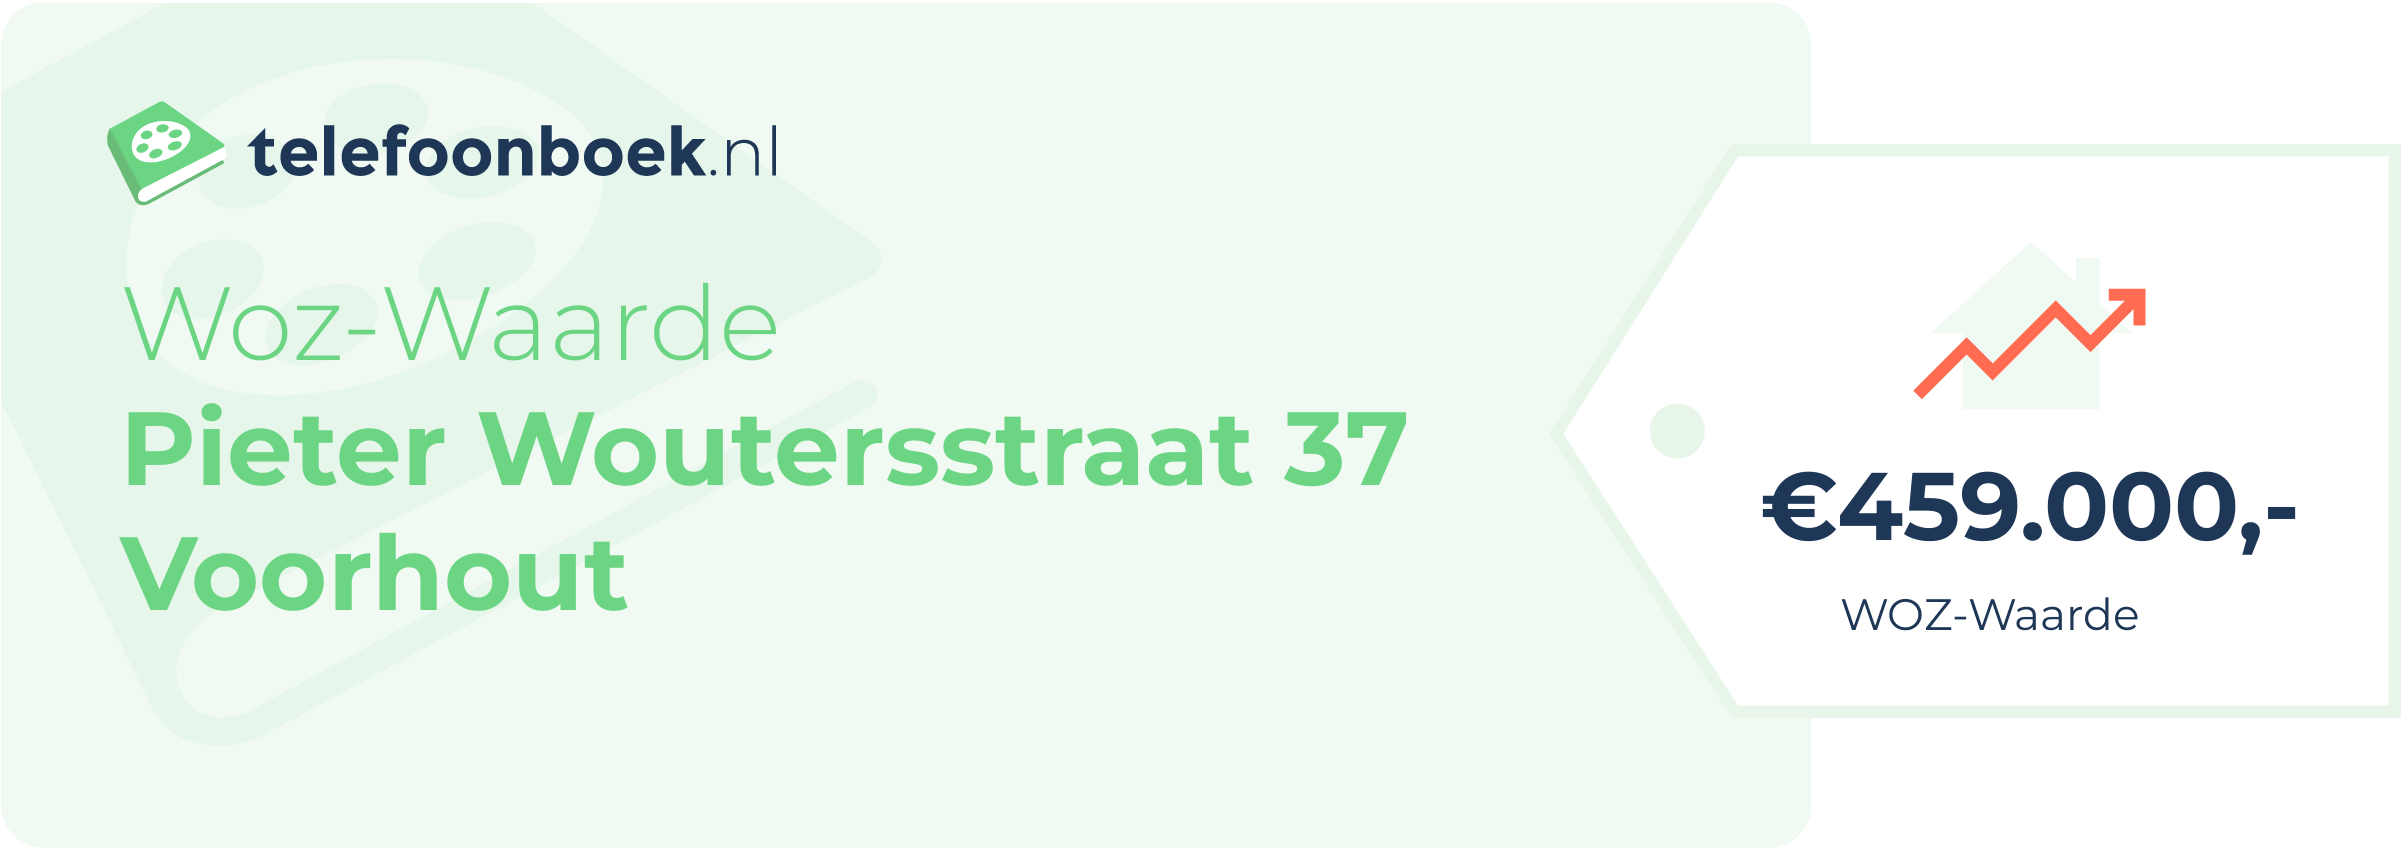 WOZ-waarde Pieter Woutersstraat 37 Voorhout